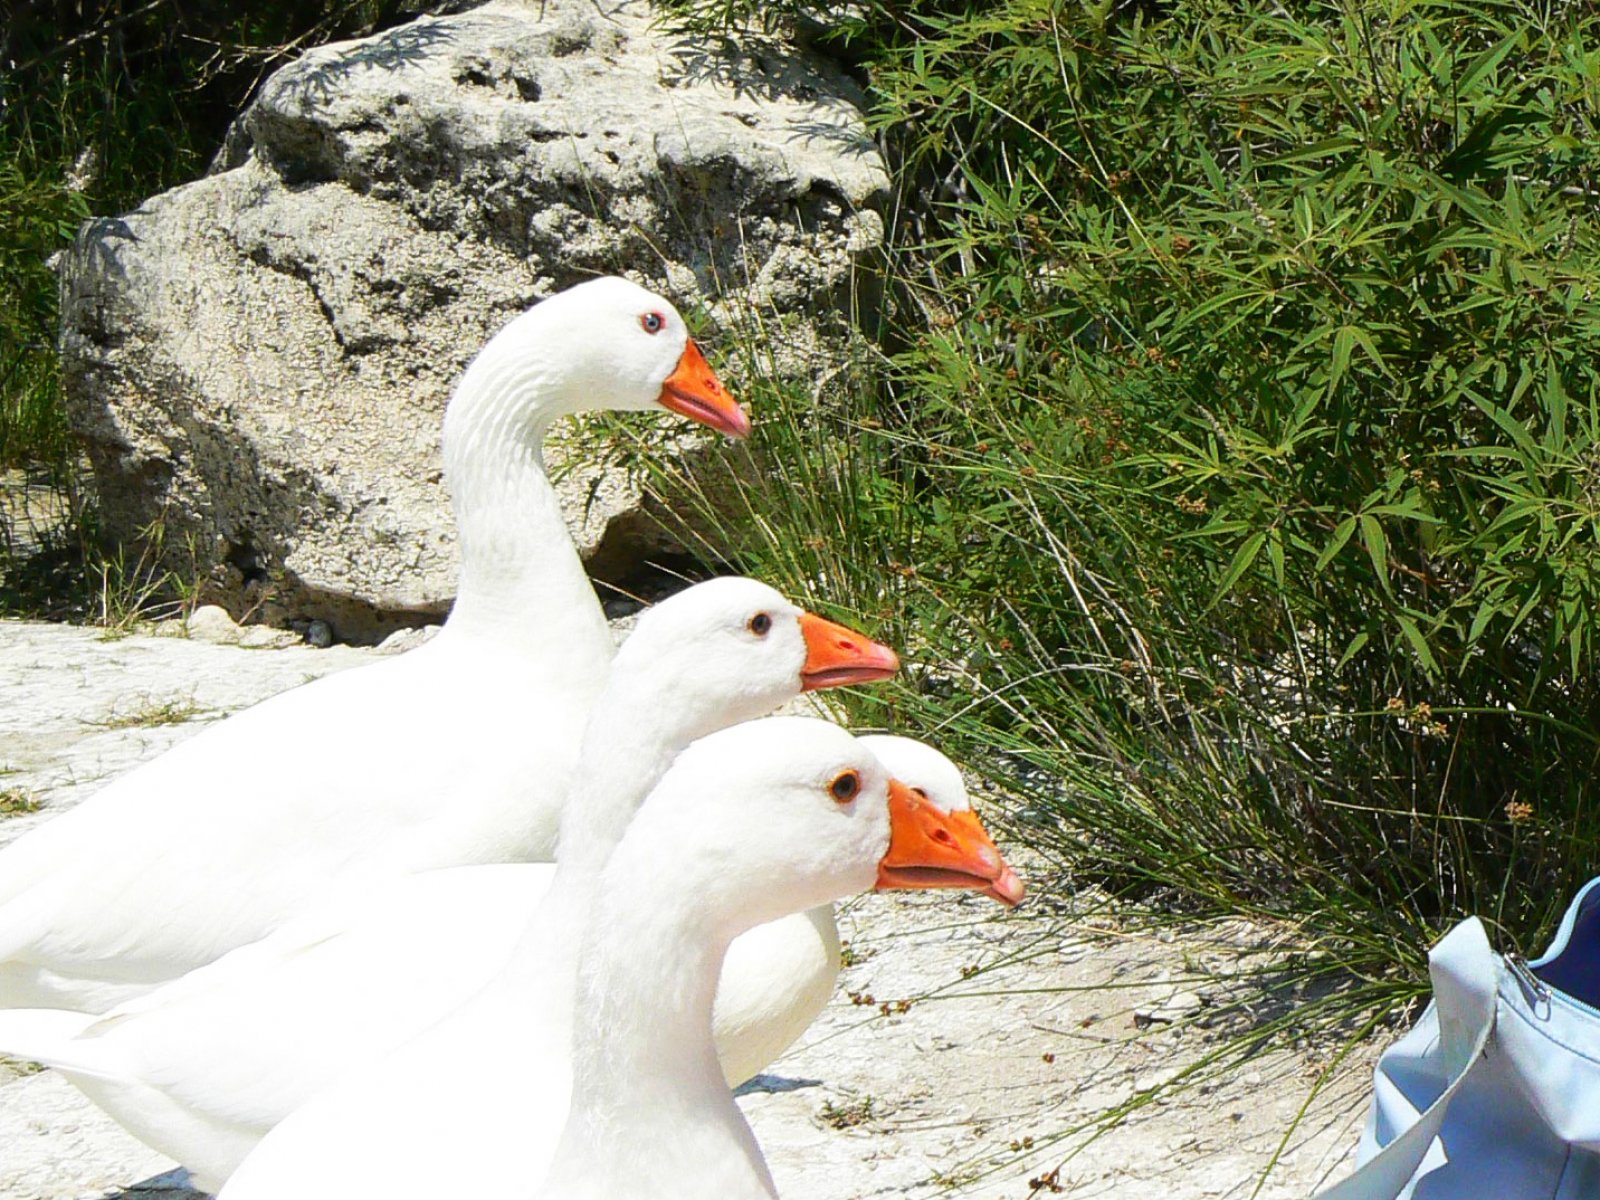 How to feed the wild geese and ducks near the lake Kournas on Crete